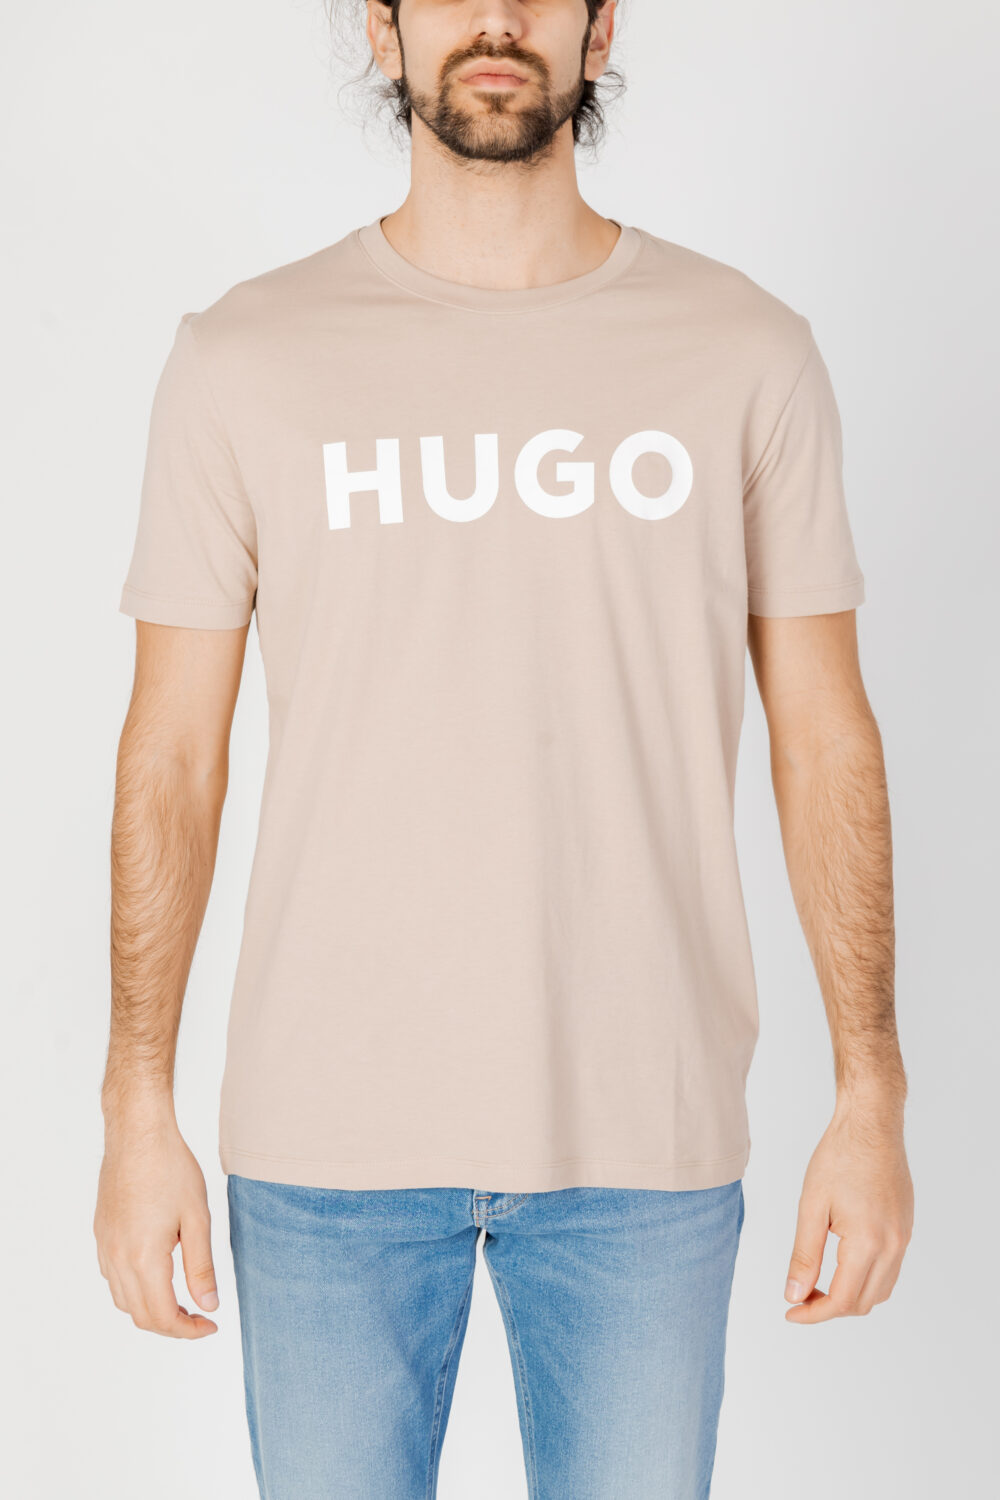 T-shirt Hugo Dulivio 10229761 01 Beige - Foto 5